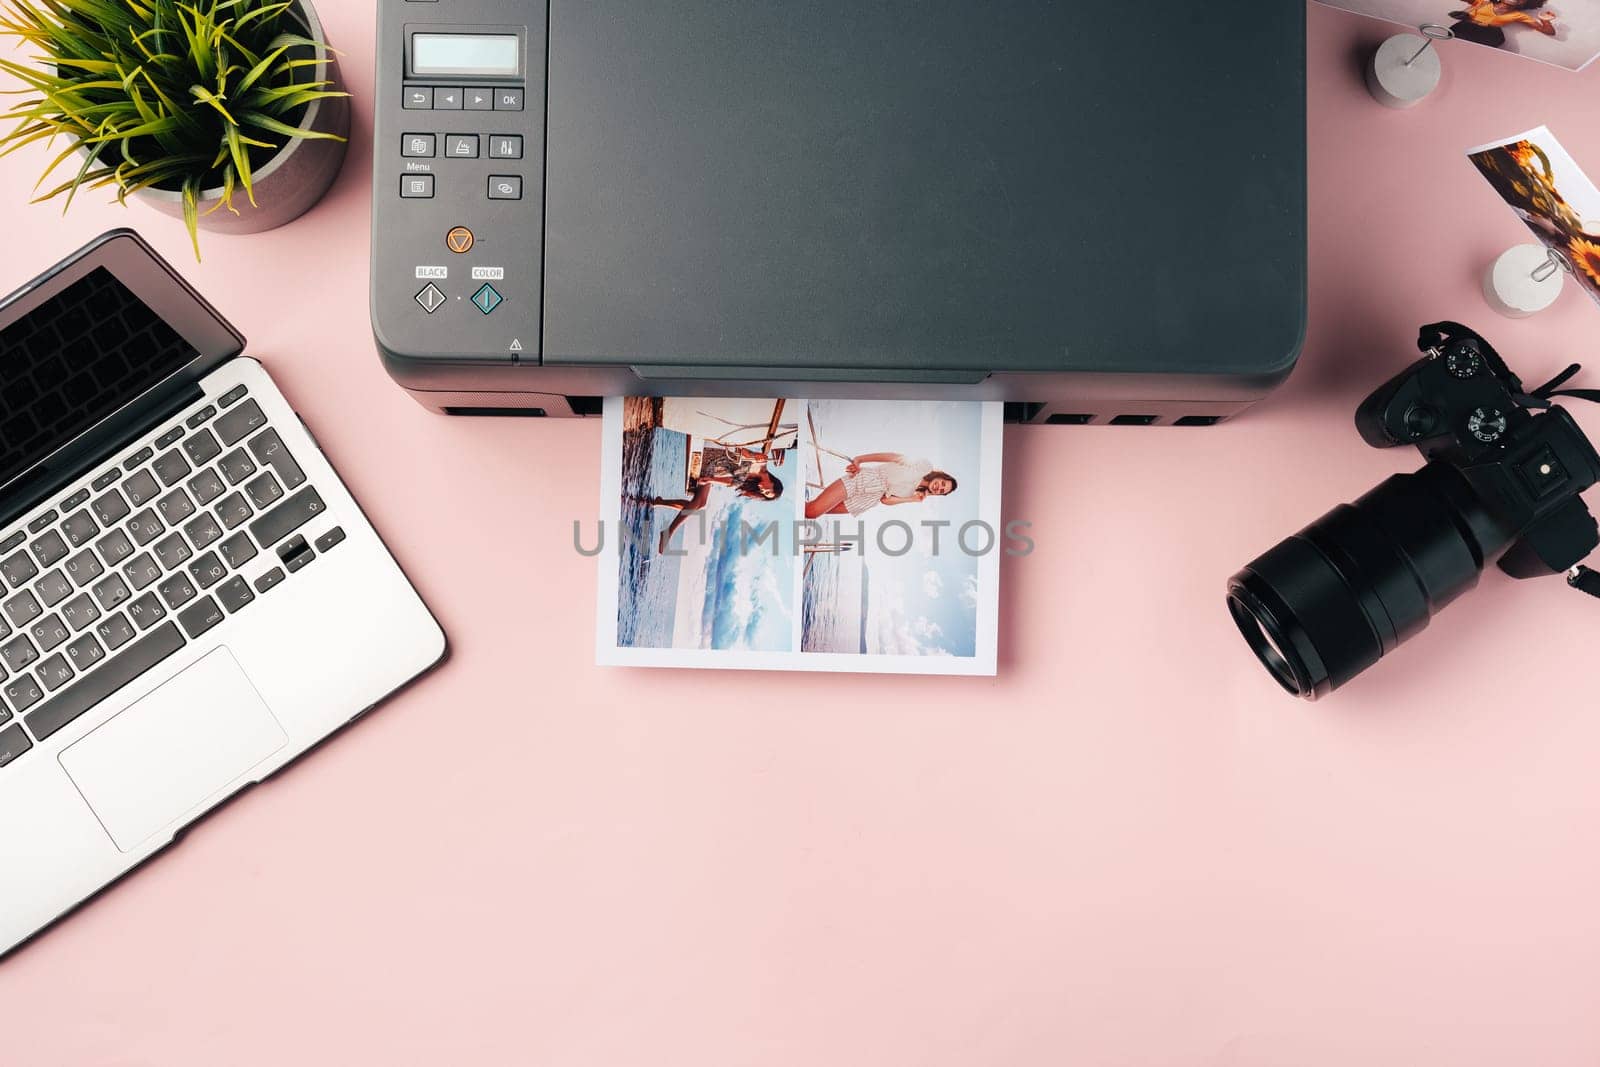 Printer, laptop and camera on table close up. Printing photos by Fabrikasimf